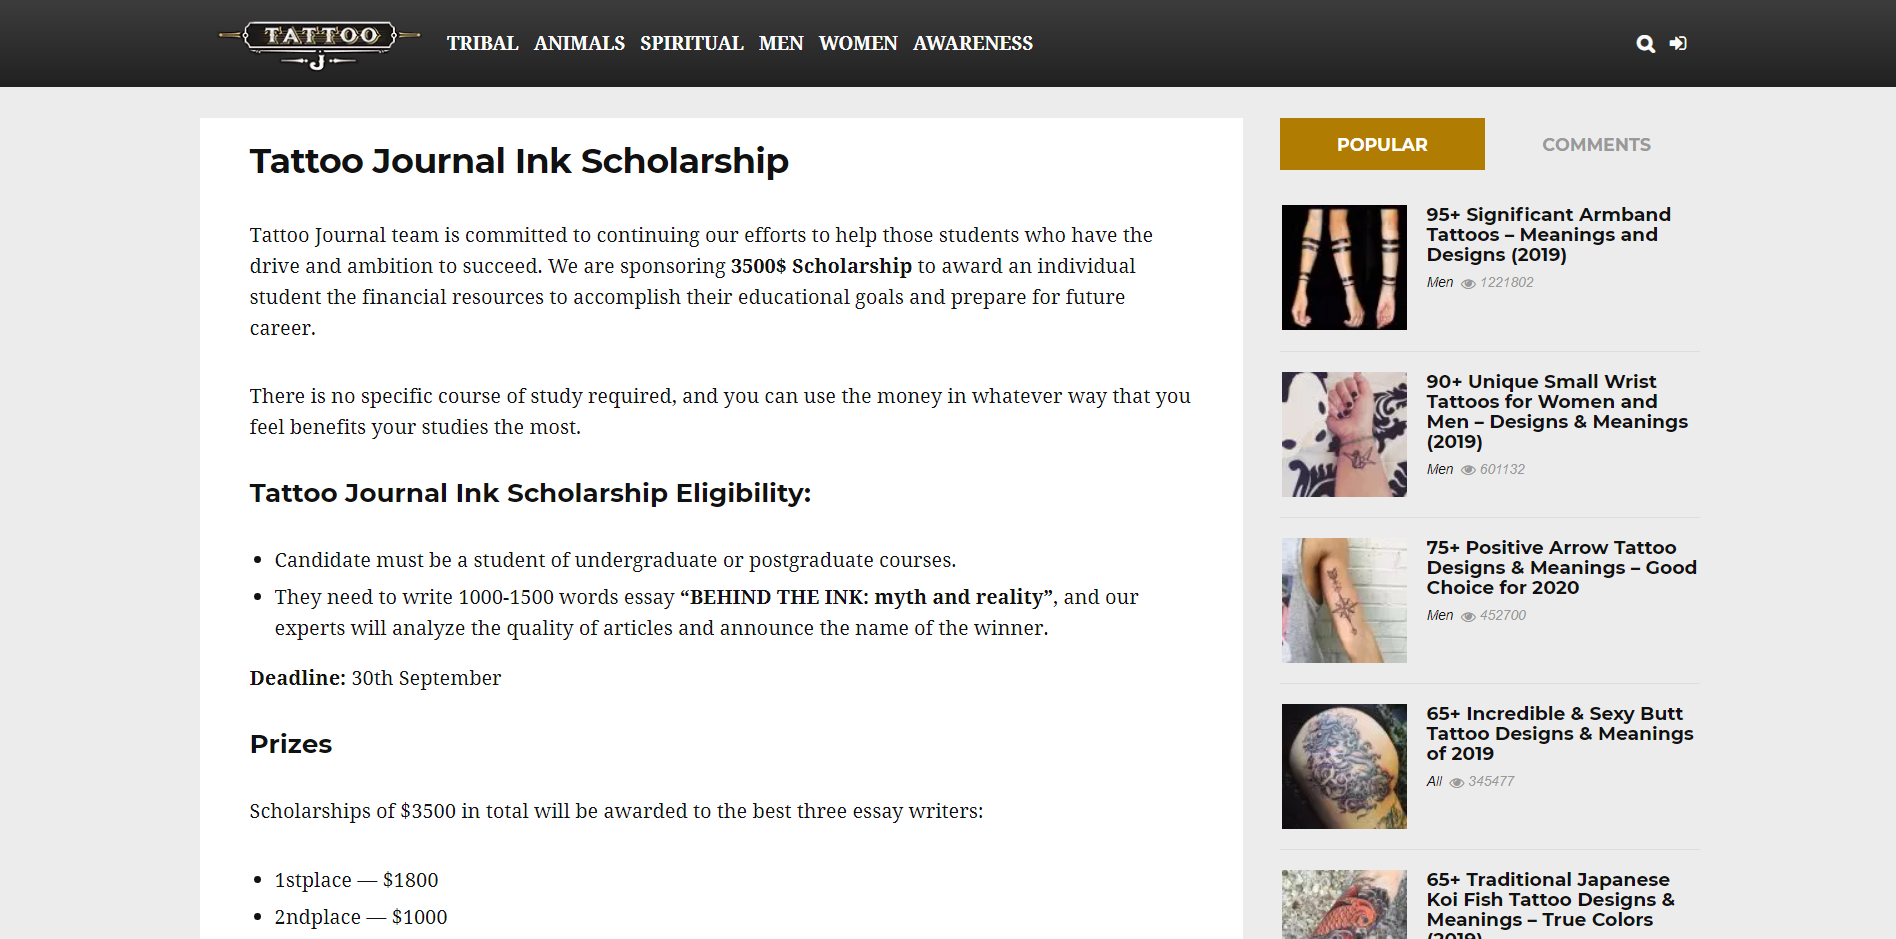 Tattoo Journal Ink Scholarship